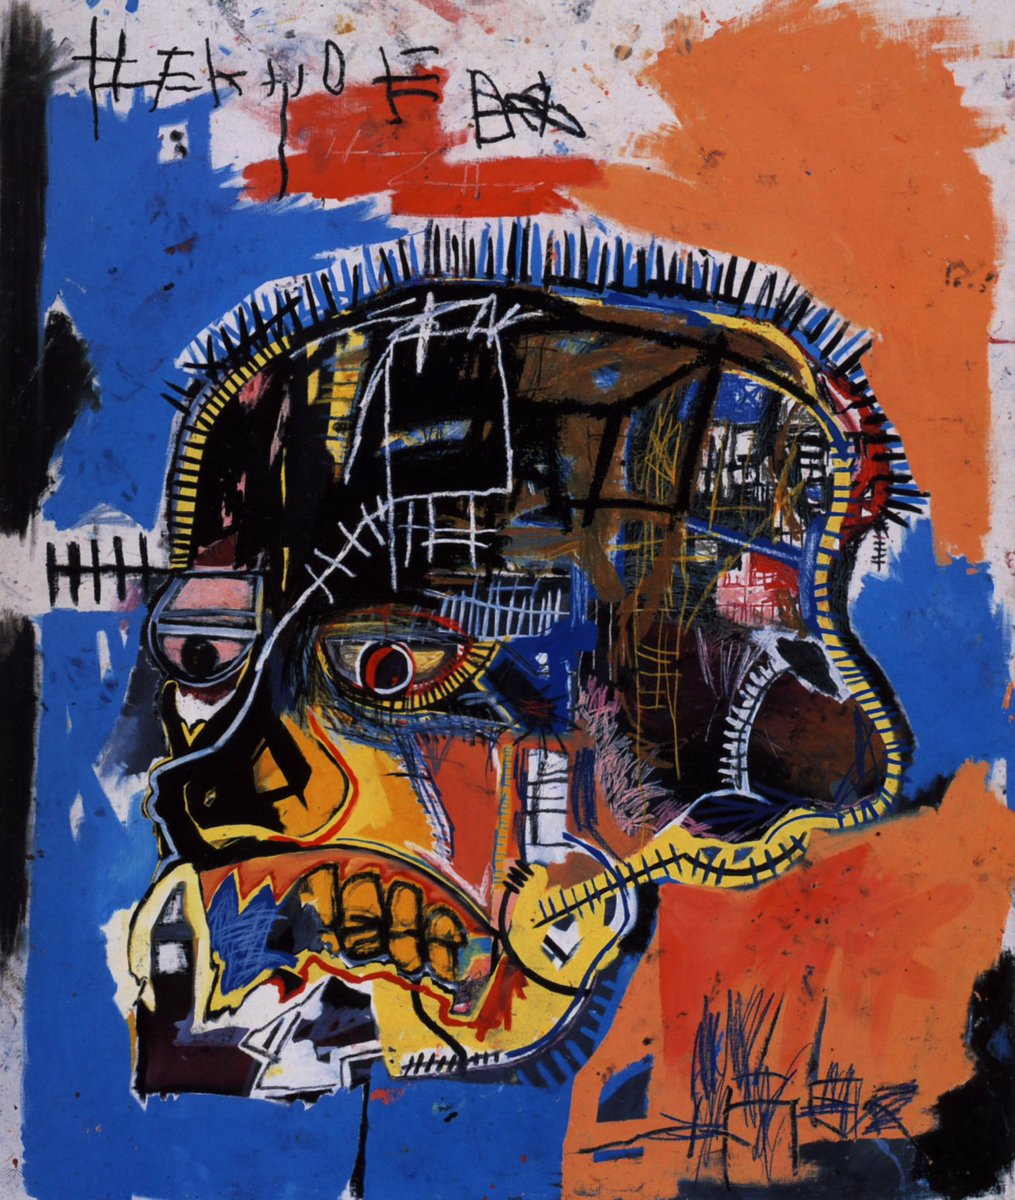 Jean Michel Basquiat…“ S K U L L“ painted 1981…🖼️🎨👍💀☠️💀☠️💀💀☠️💀☠️
#abstractexpressionism #abstract #art #artwork #basquiat #modernart #paint